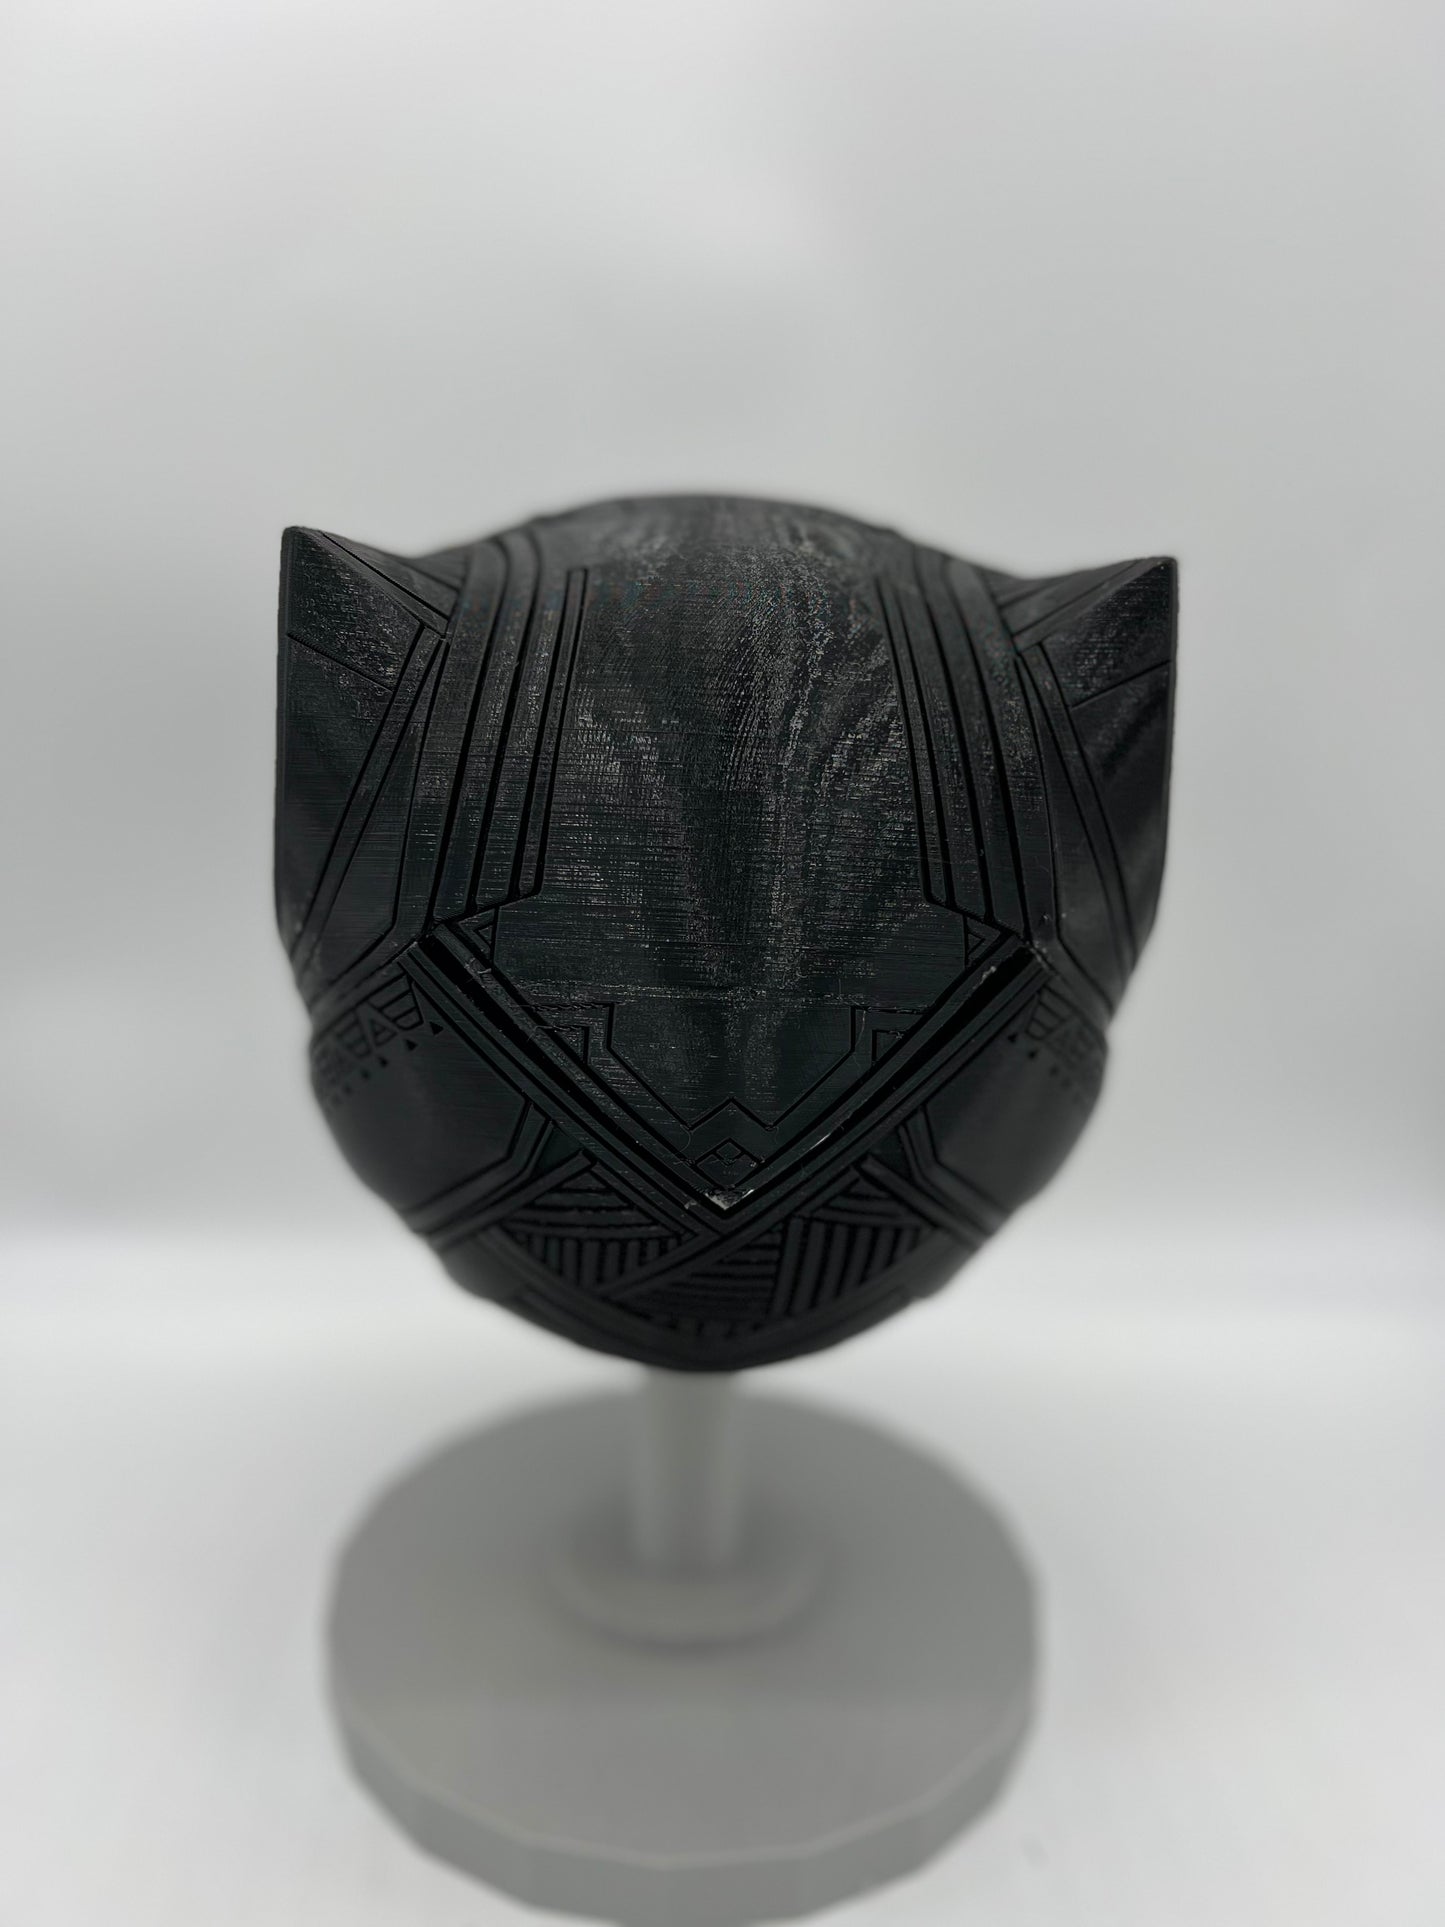 Black Panther Civil War Cosplay Helmet